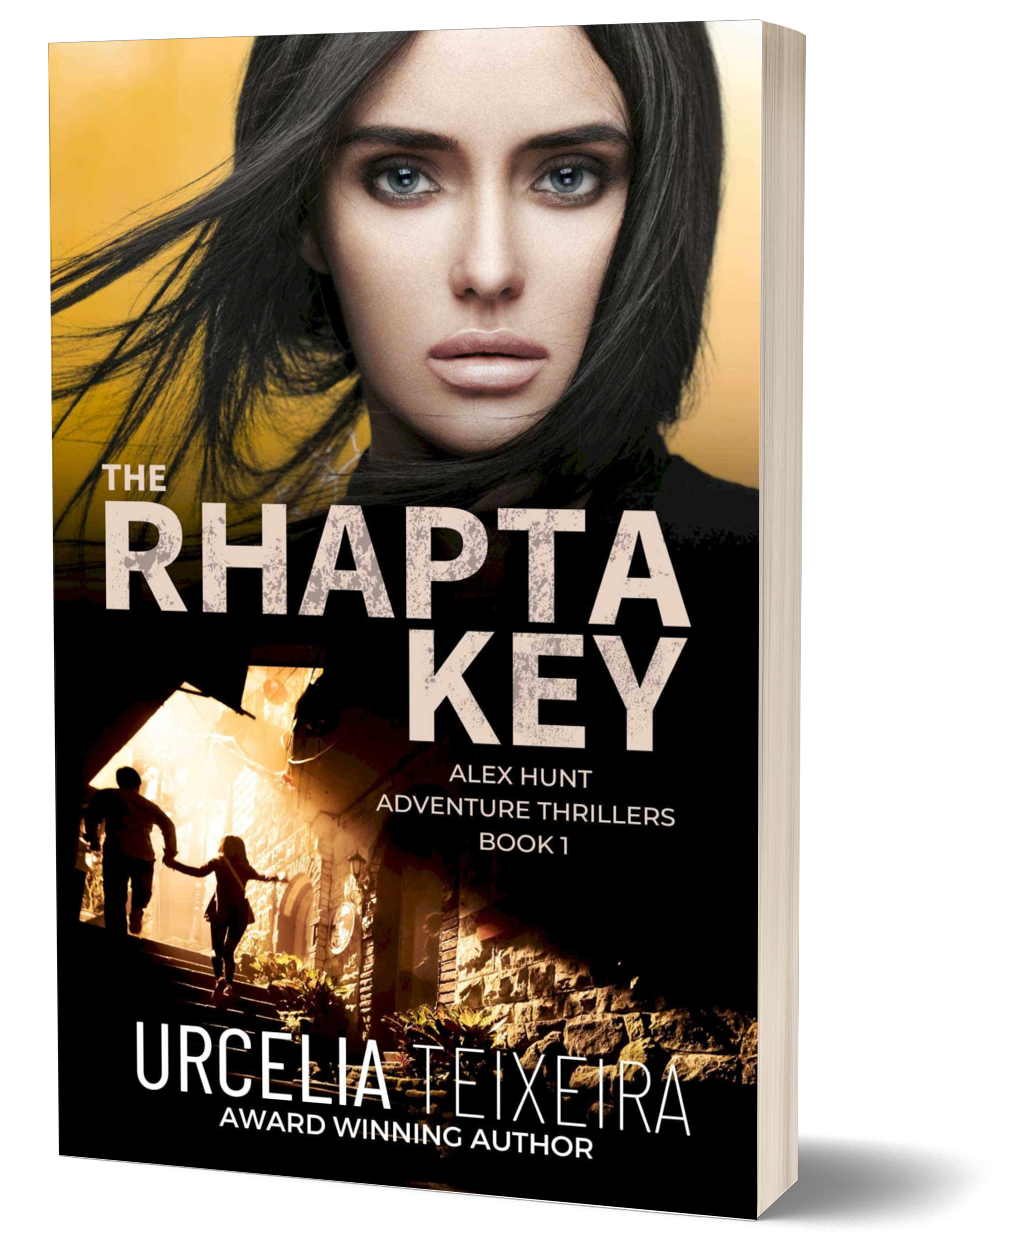 The Rhapta Key - Alex Hunt Adventure Thrillers Book 1 (Paperback)